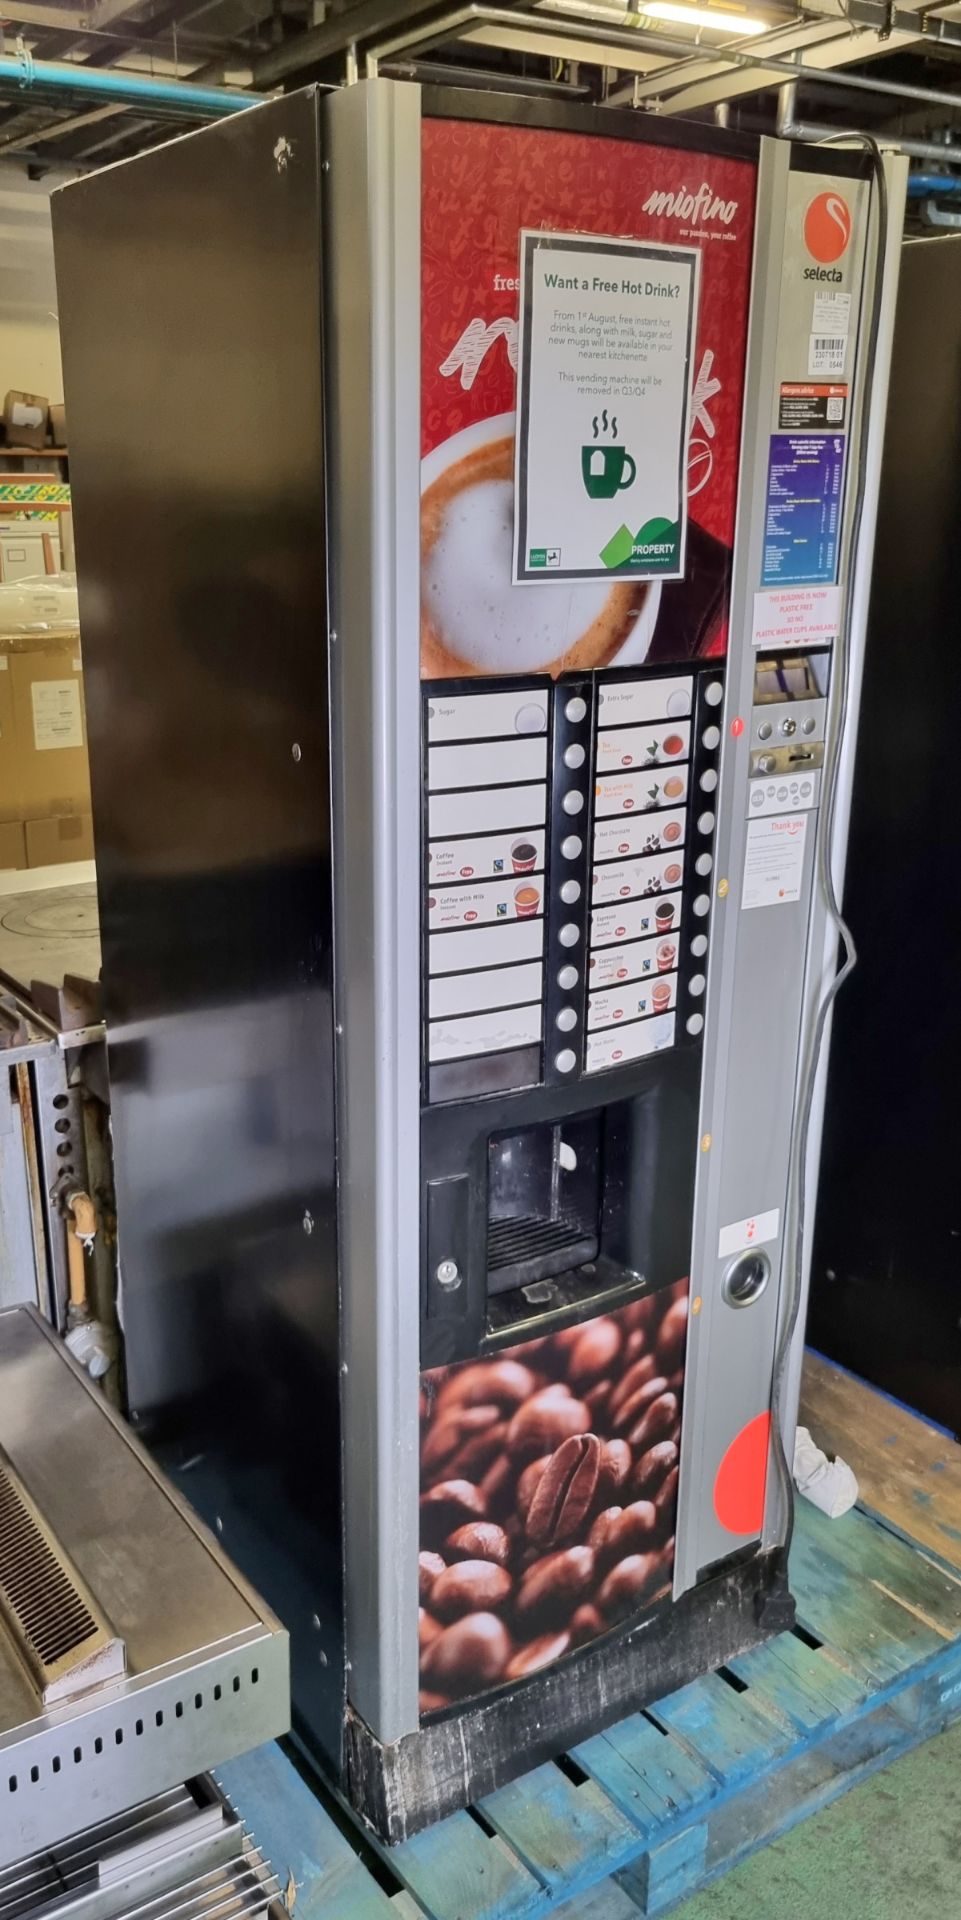 Miofino 960406 Selecta drinks vending machine - coin operated - 240V 50Hz - L 650 x W 730 x H 1830mm - Bild 2 aus 4